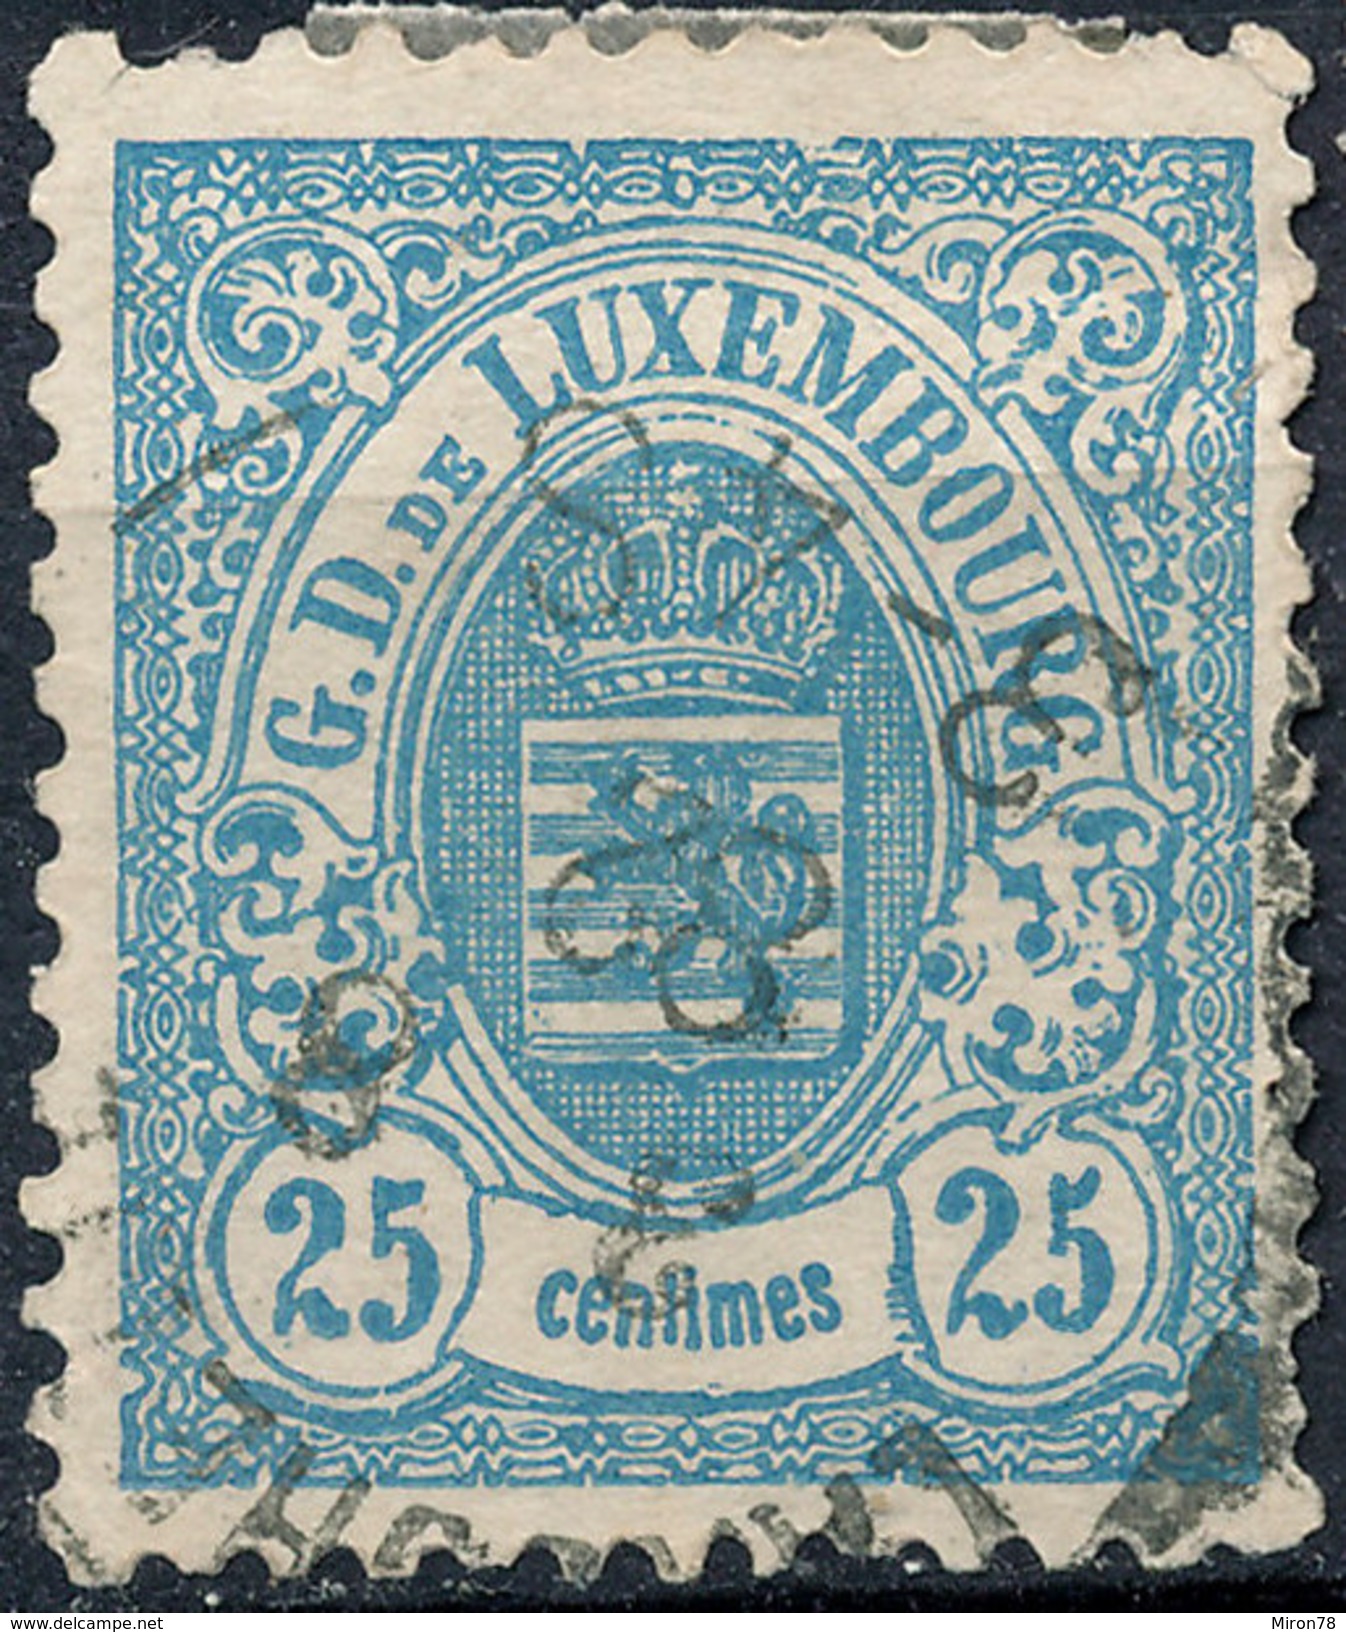 Stamp  Luxembourg 1875-80? 25c Used Lot#9 - 1859-1880 Wappen & Heraldik